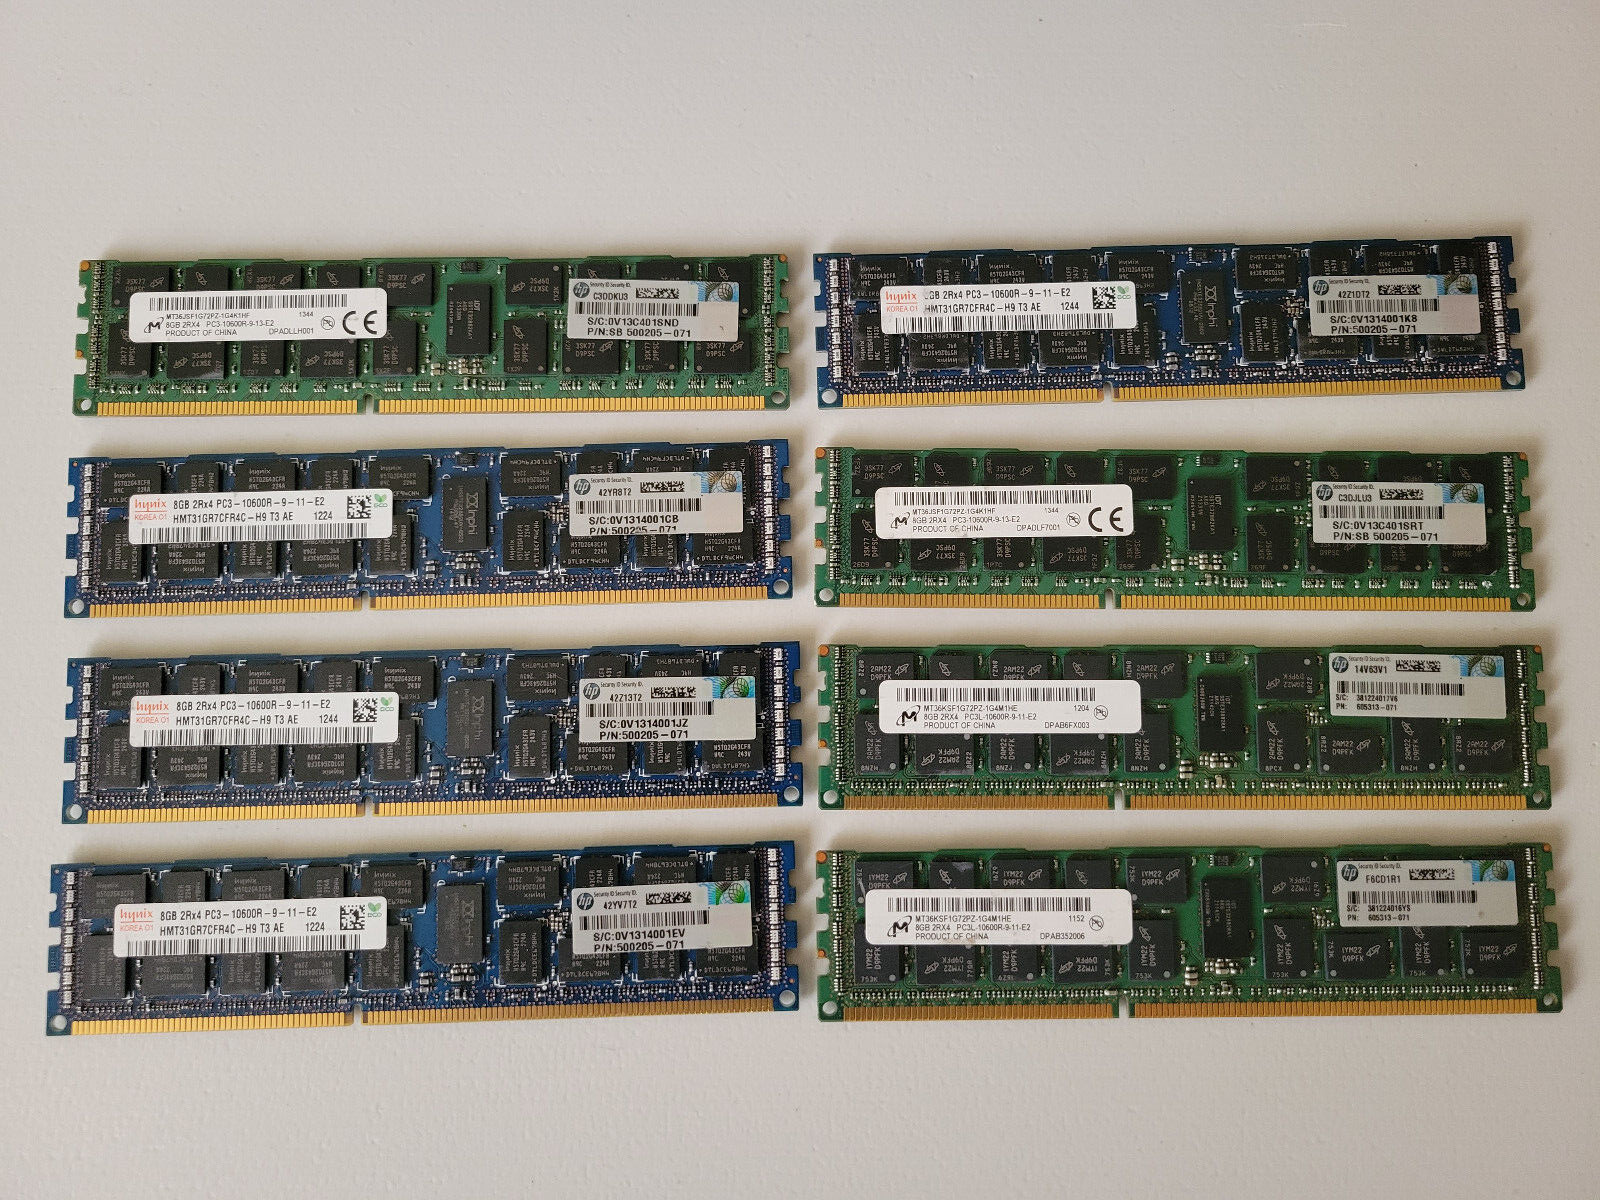 8x8GB (64GB) 2RX4 PC3-10600R DDR3 MICRON / HYNIX HP 500205-071 ECC SERVER MEMORY